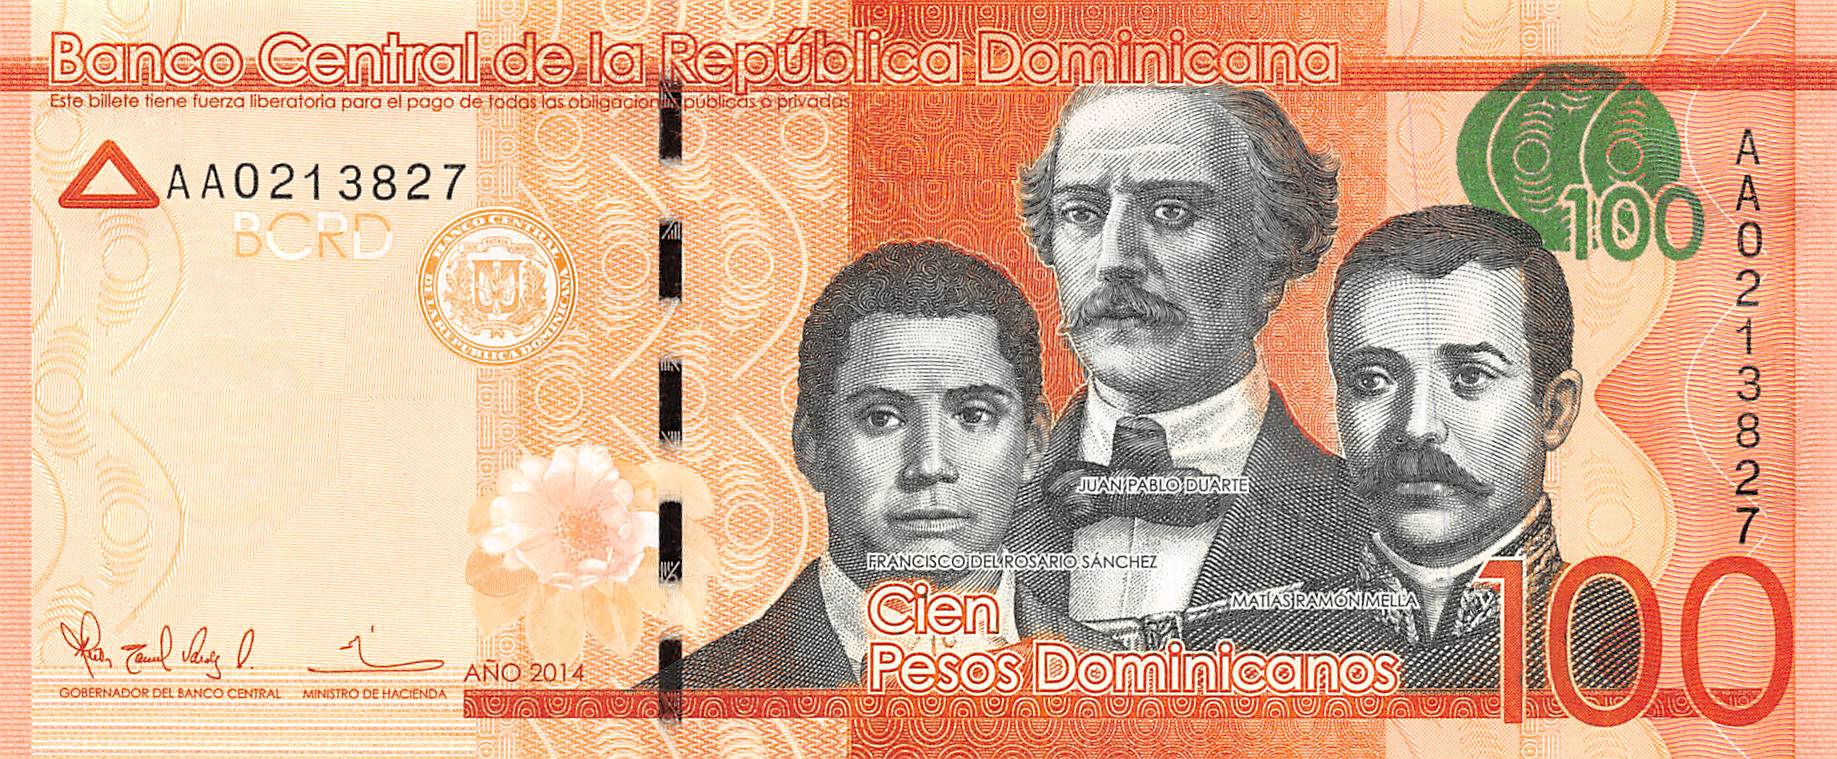 DOMINICAN REPUBLIC BANKNOTE P171 100 PESOS 2004 UNC LOW SERIAL NBR 